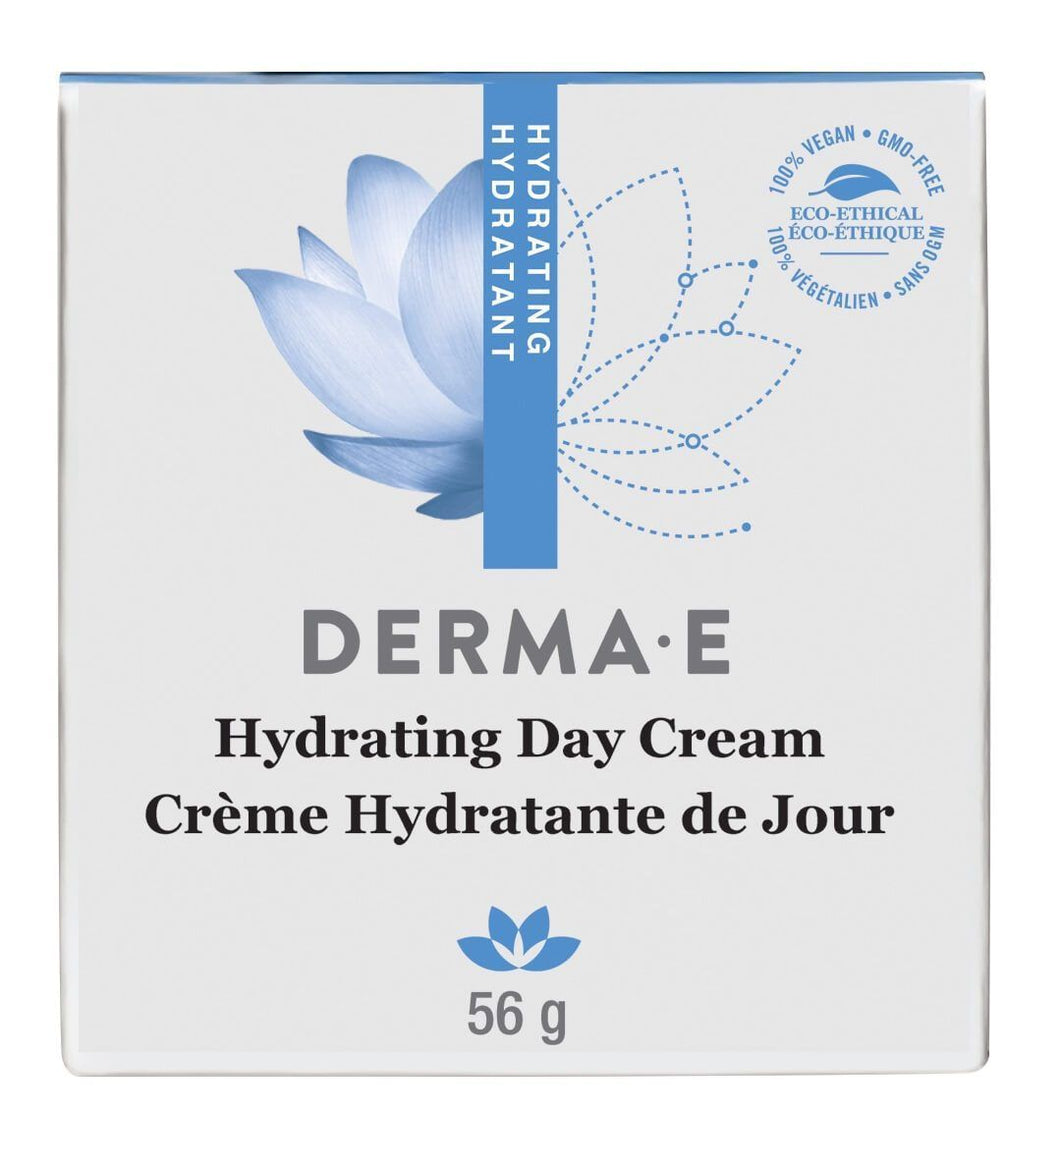 Derma E crème hydratante de jour - Derma E